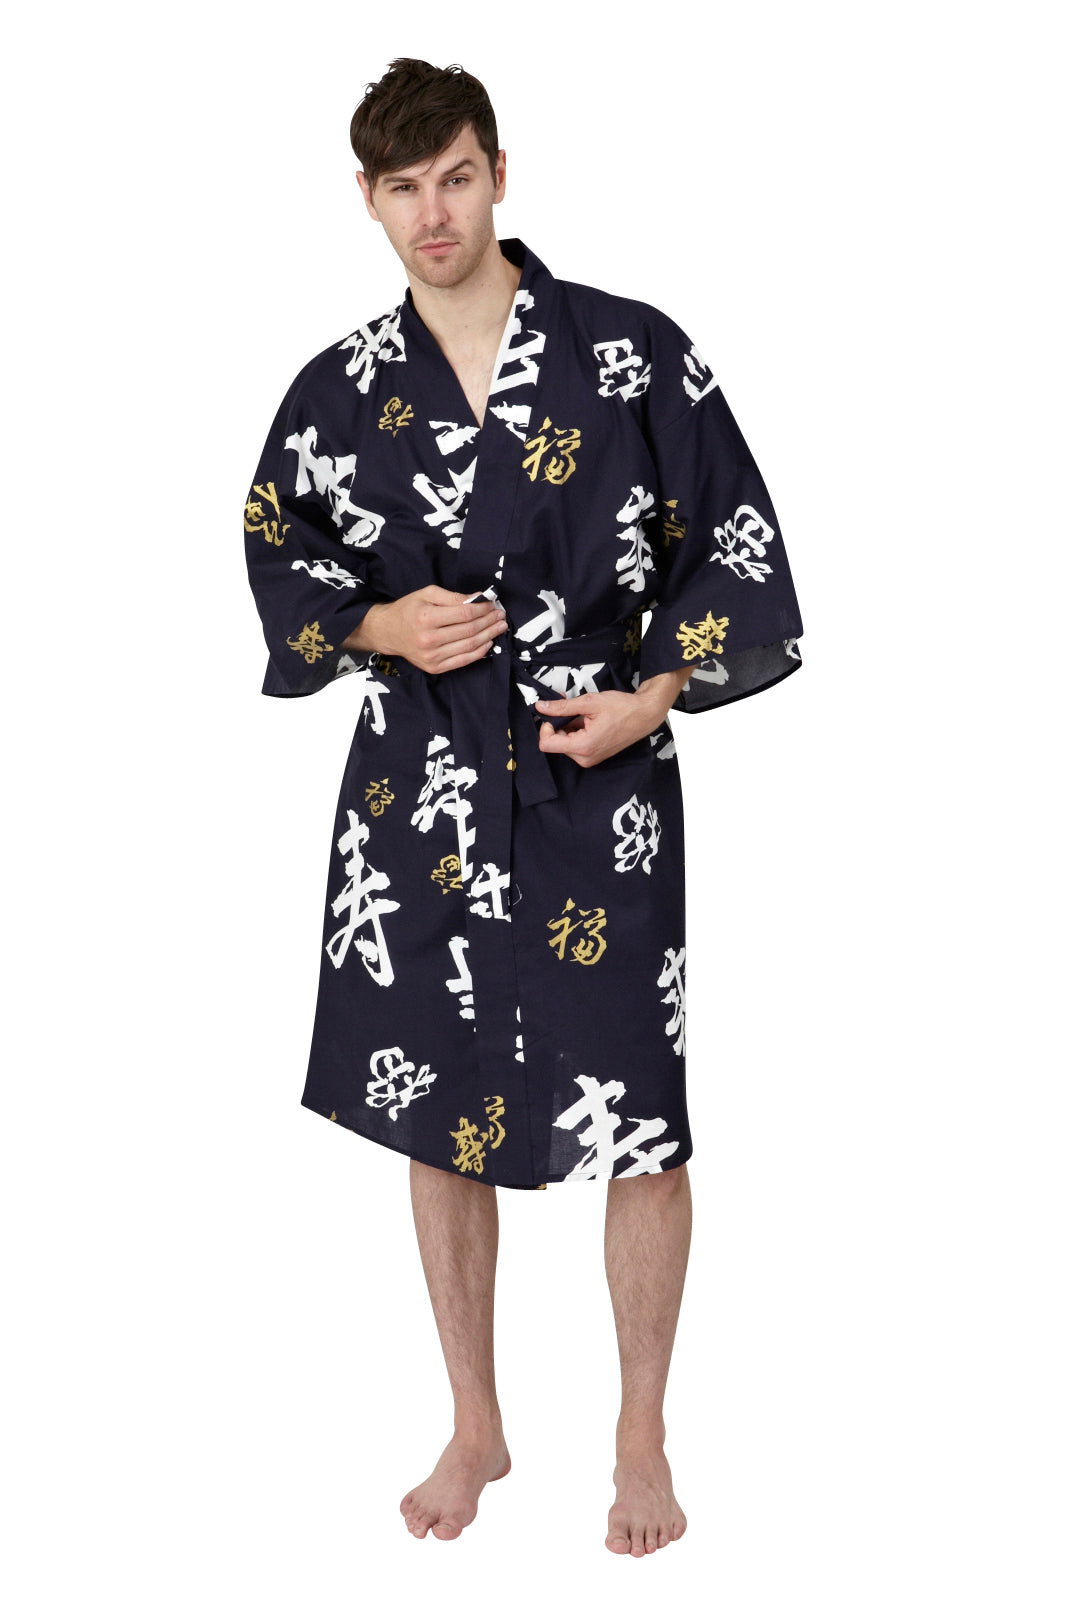 Japanese 36"L Cotton Happi Coat Kimono Robe Ancient Coin Black Made in Japan 